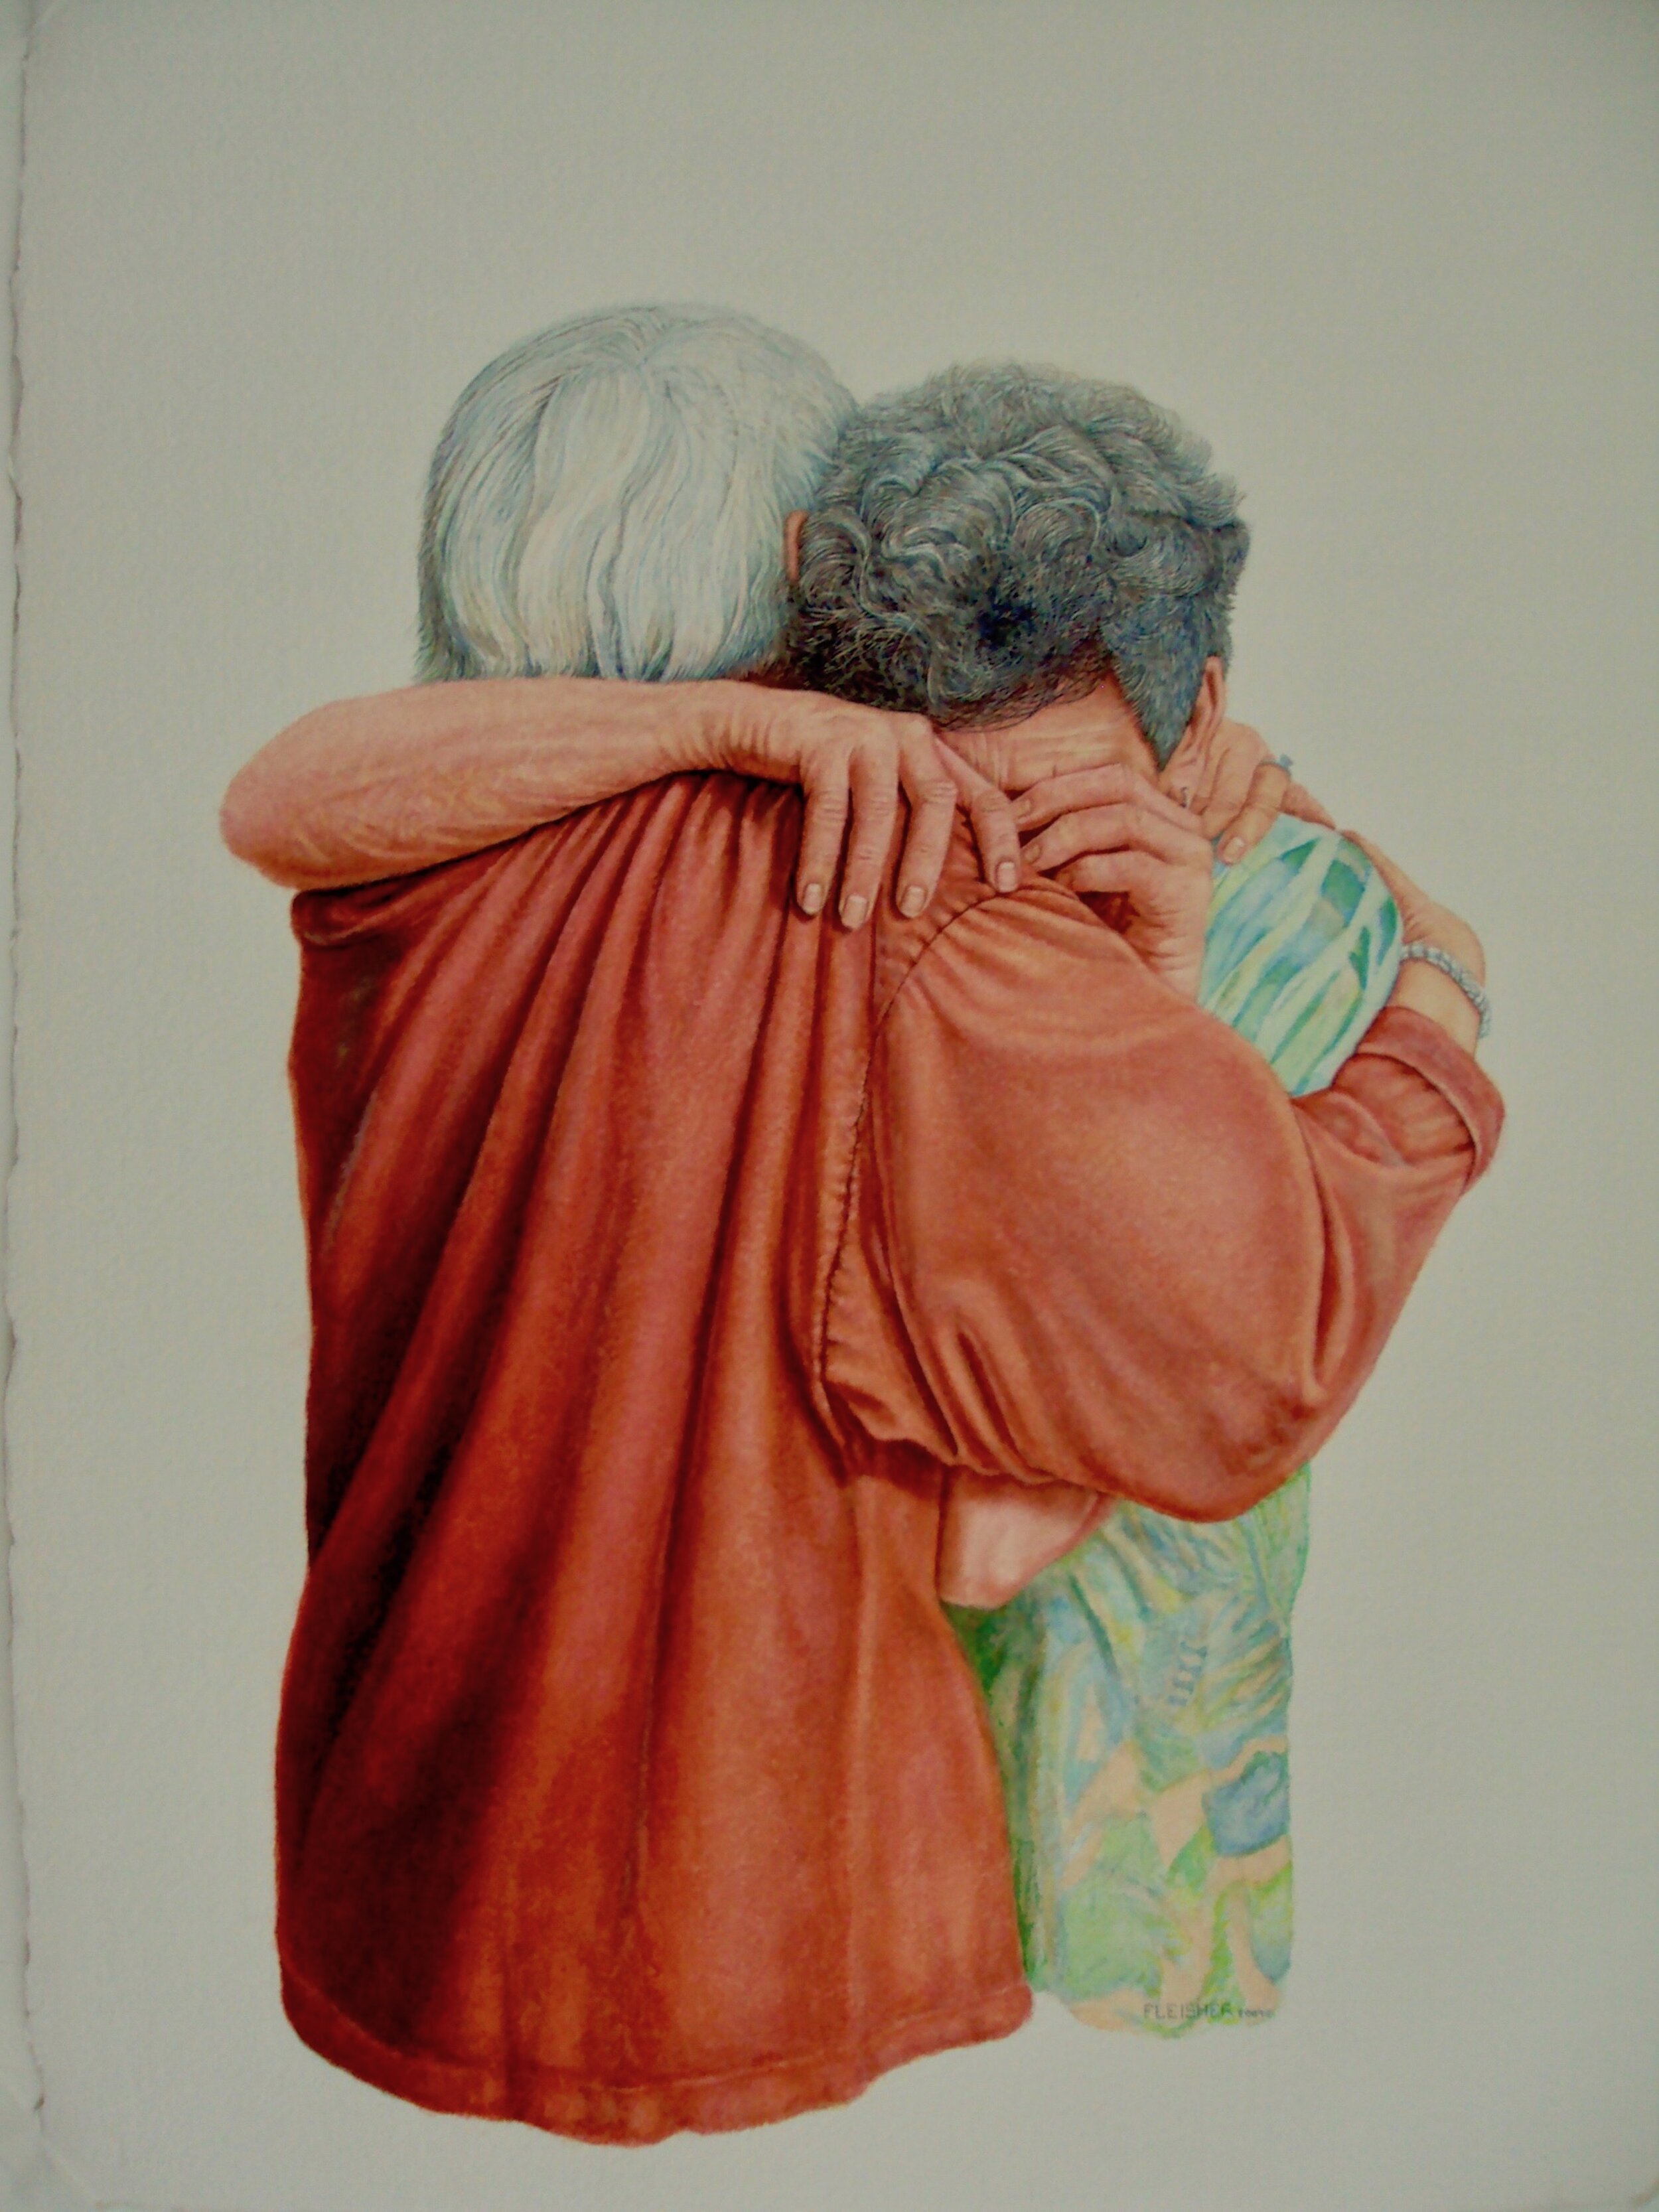 Title: The Hug   2009  30 x 23  watercolor